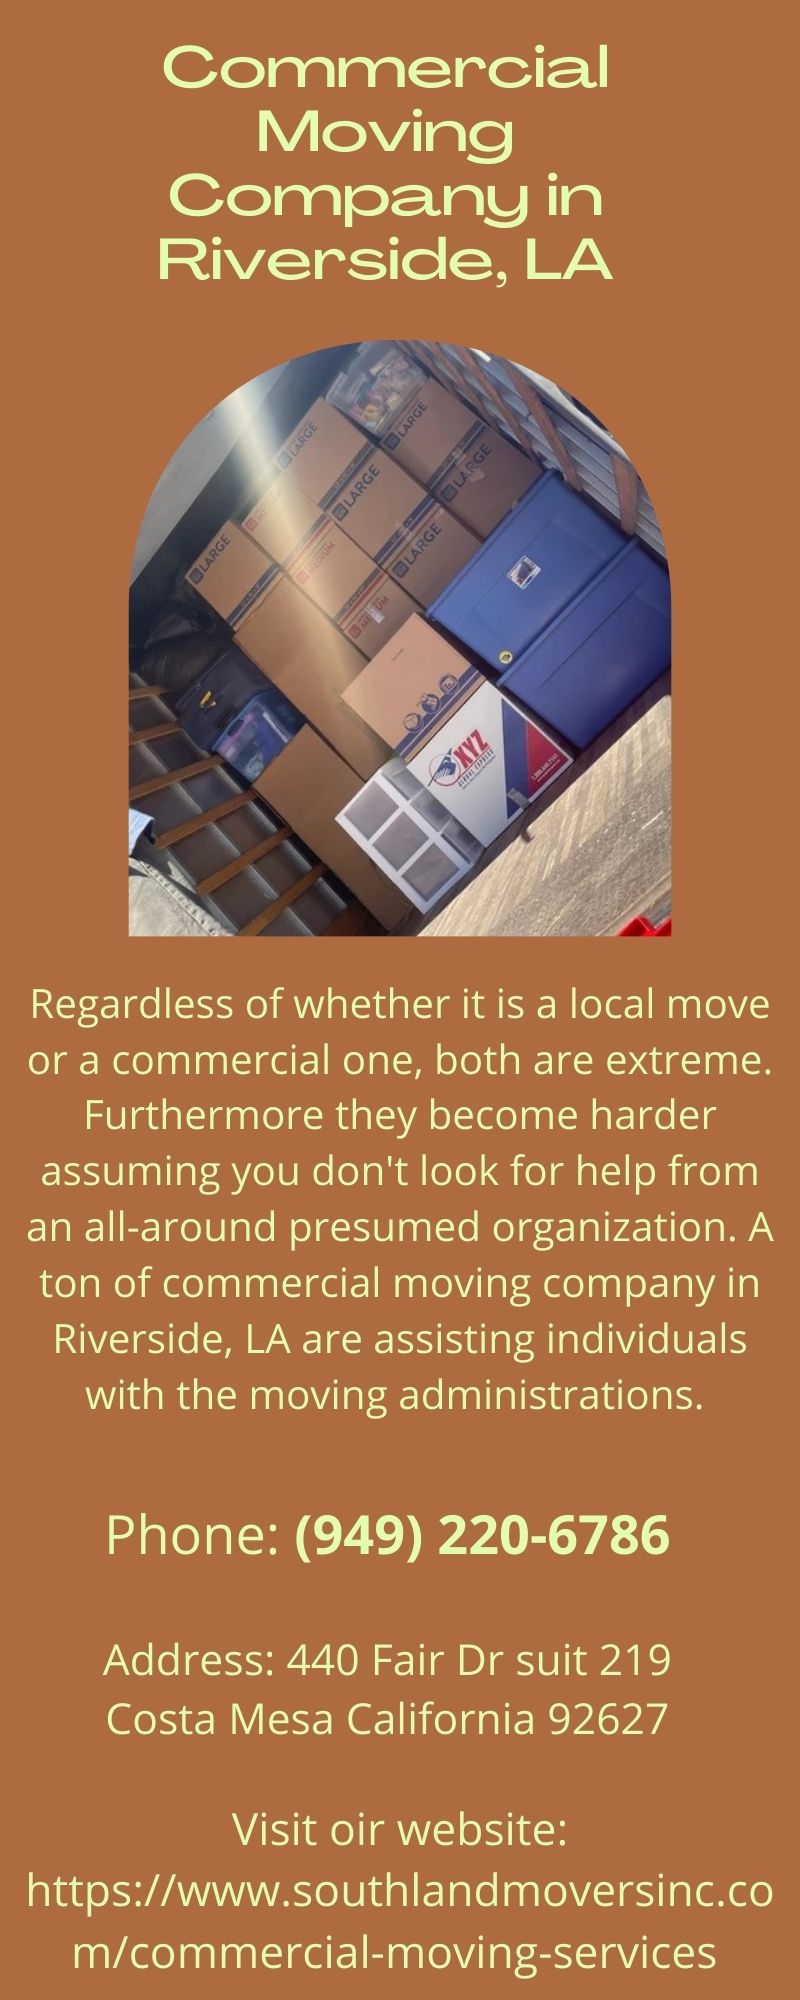 Commercial moving company in Riverside, LA.jpg